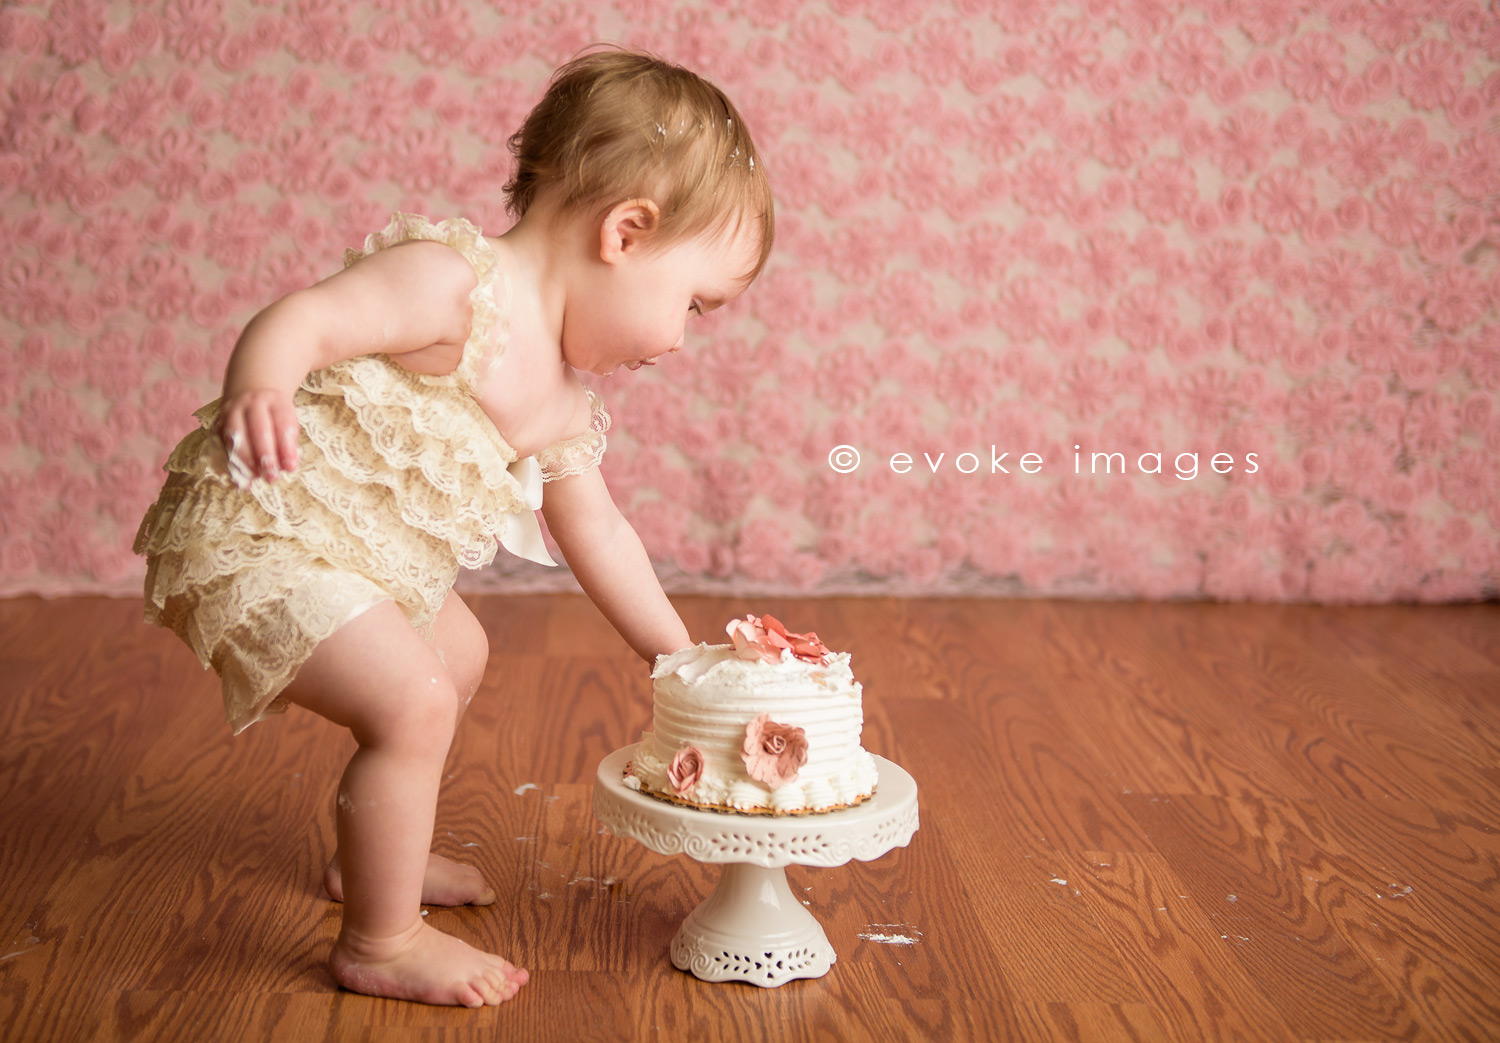 anchorage Alaska studio photography cake smash little girl pink